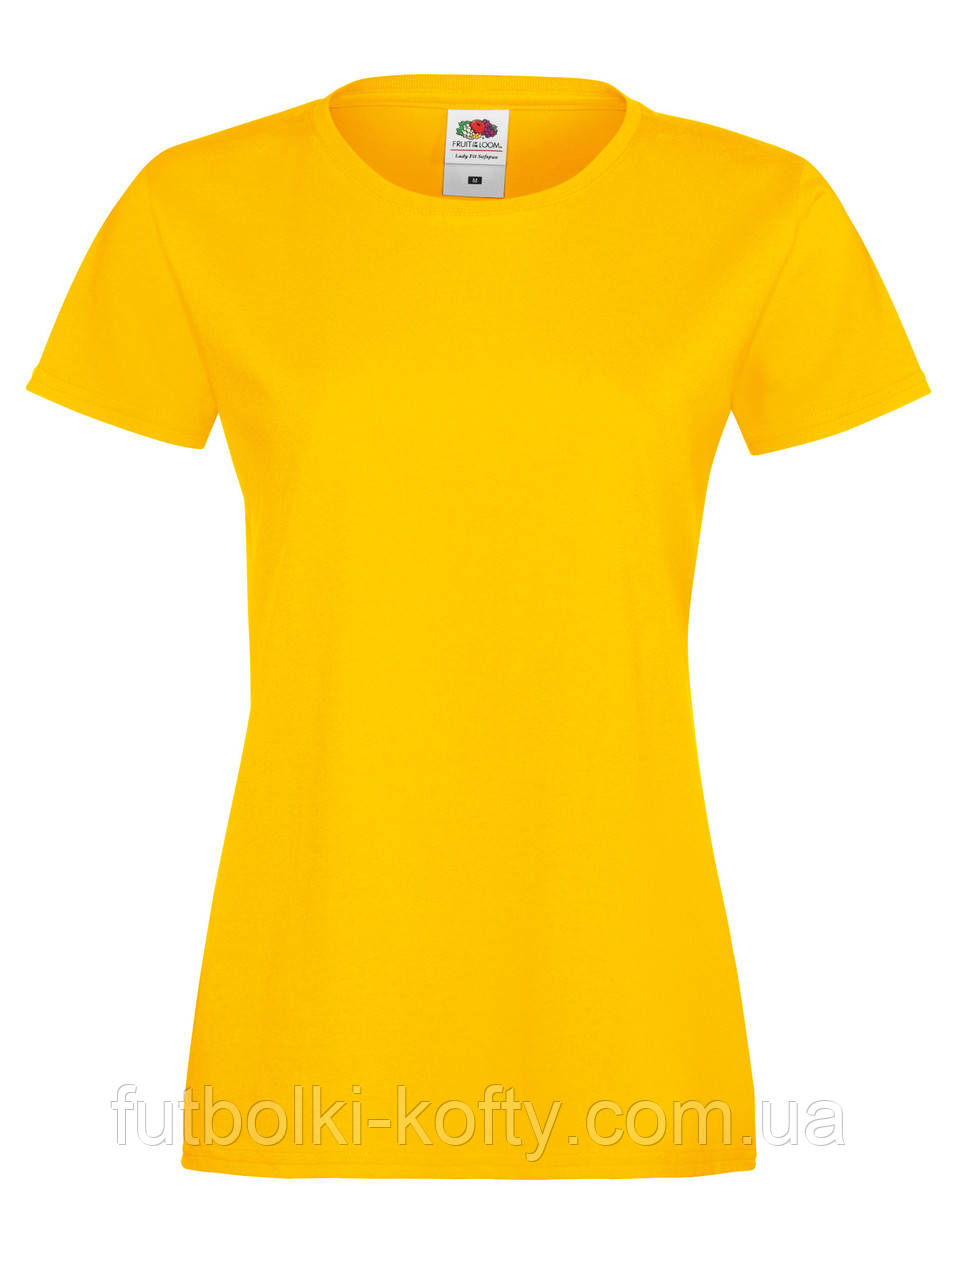 Жіноча футболка М'яка Сонячно-жовта Fruit of the loom 61-414-34 M